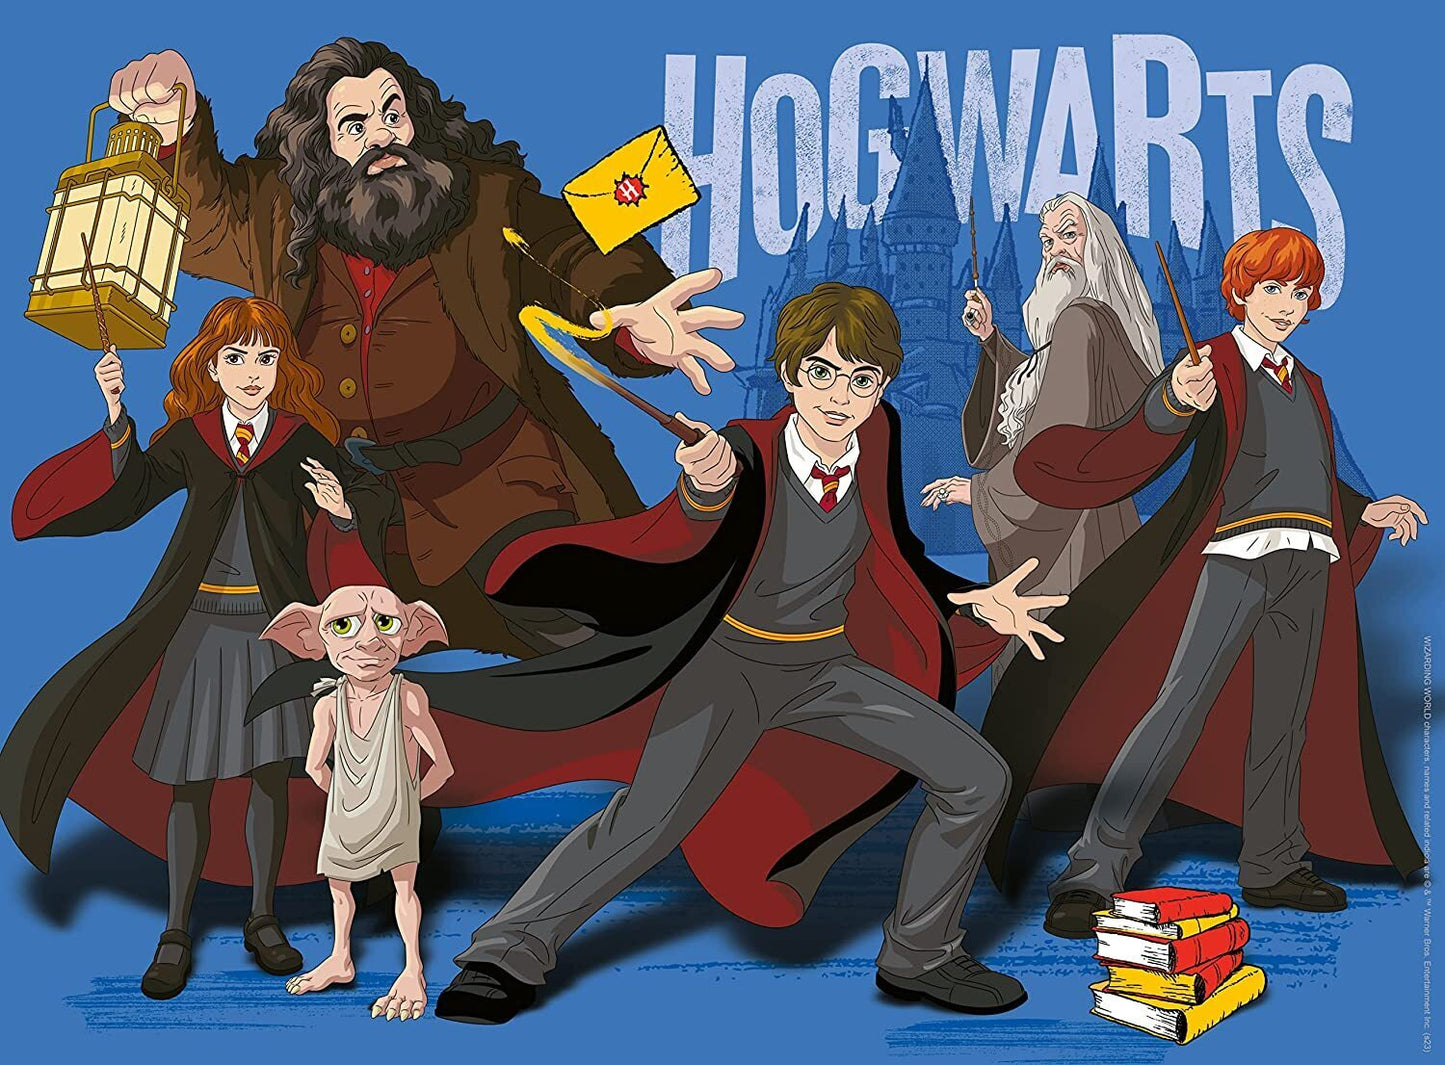 Ravensburger Puzzle Hogwarts Magic School Harry Potter 300pc